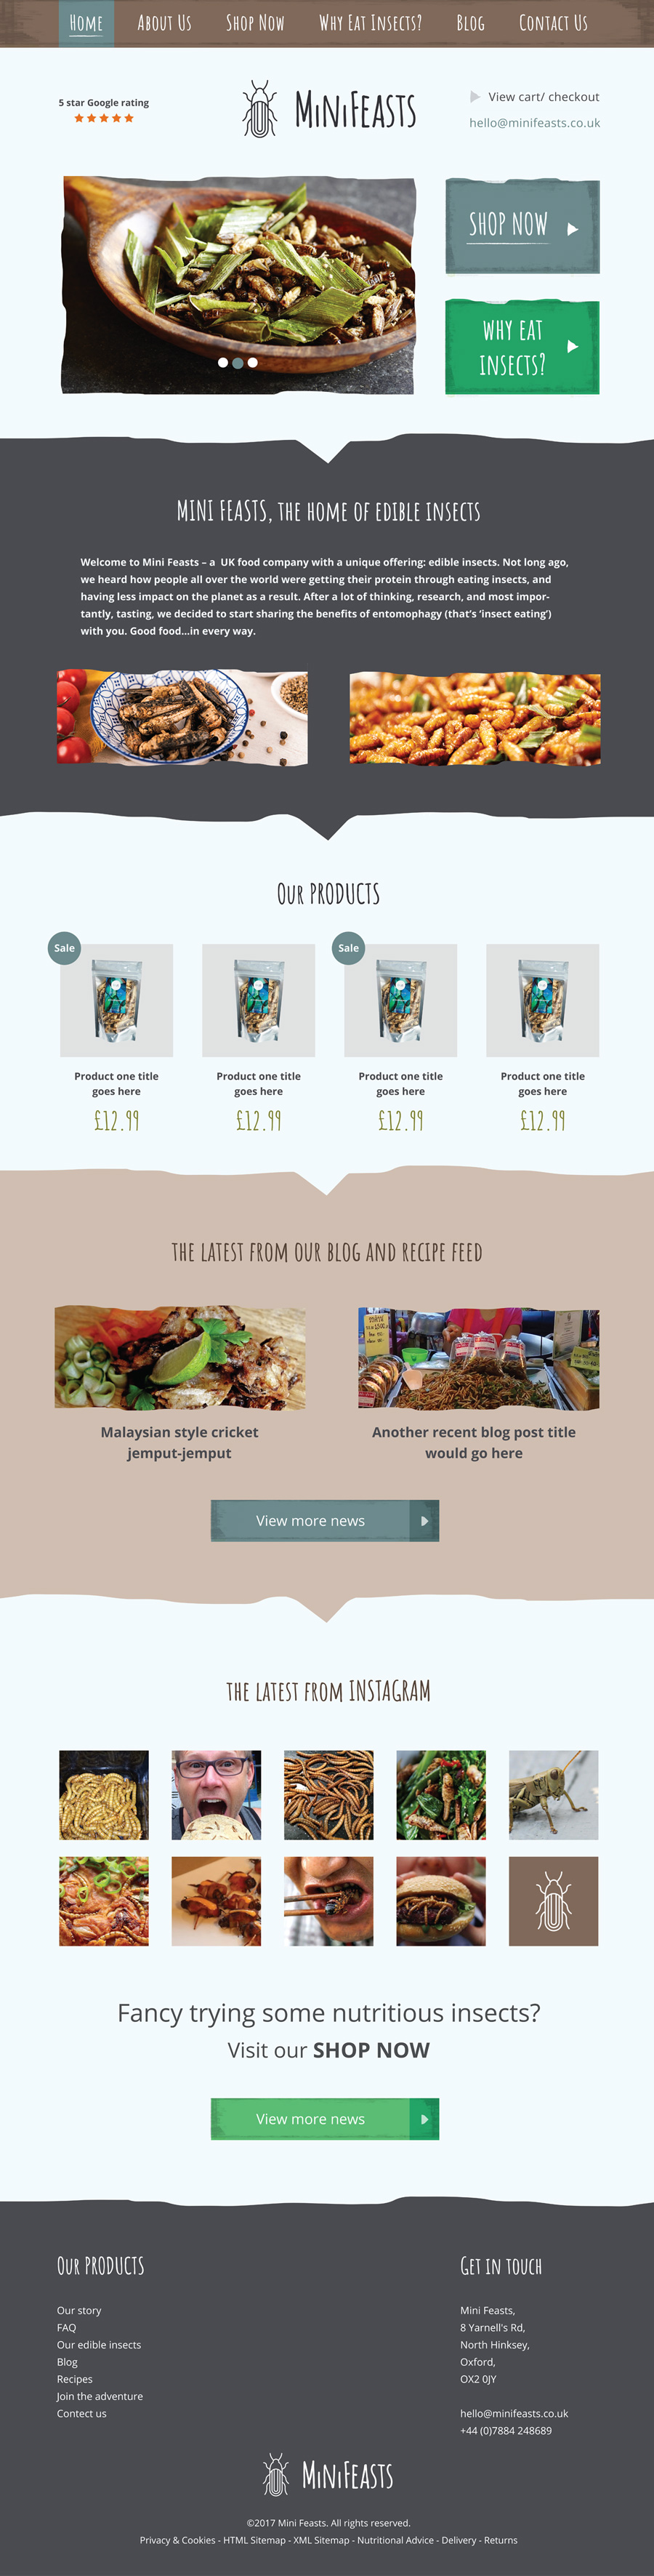 WooCommerce web design for Mini Feasts, Oxford